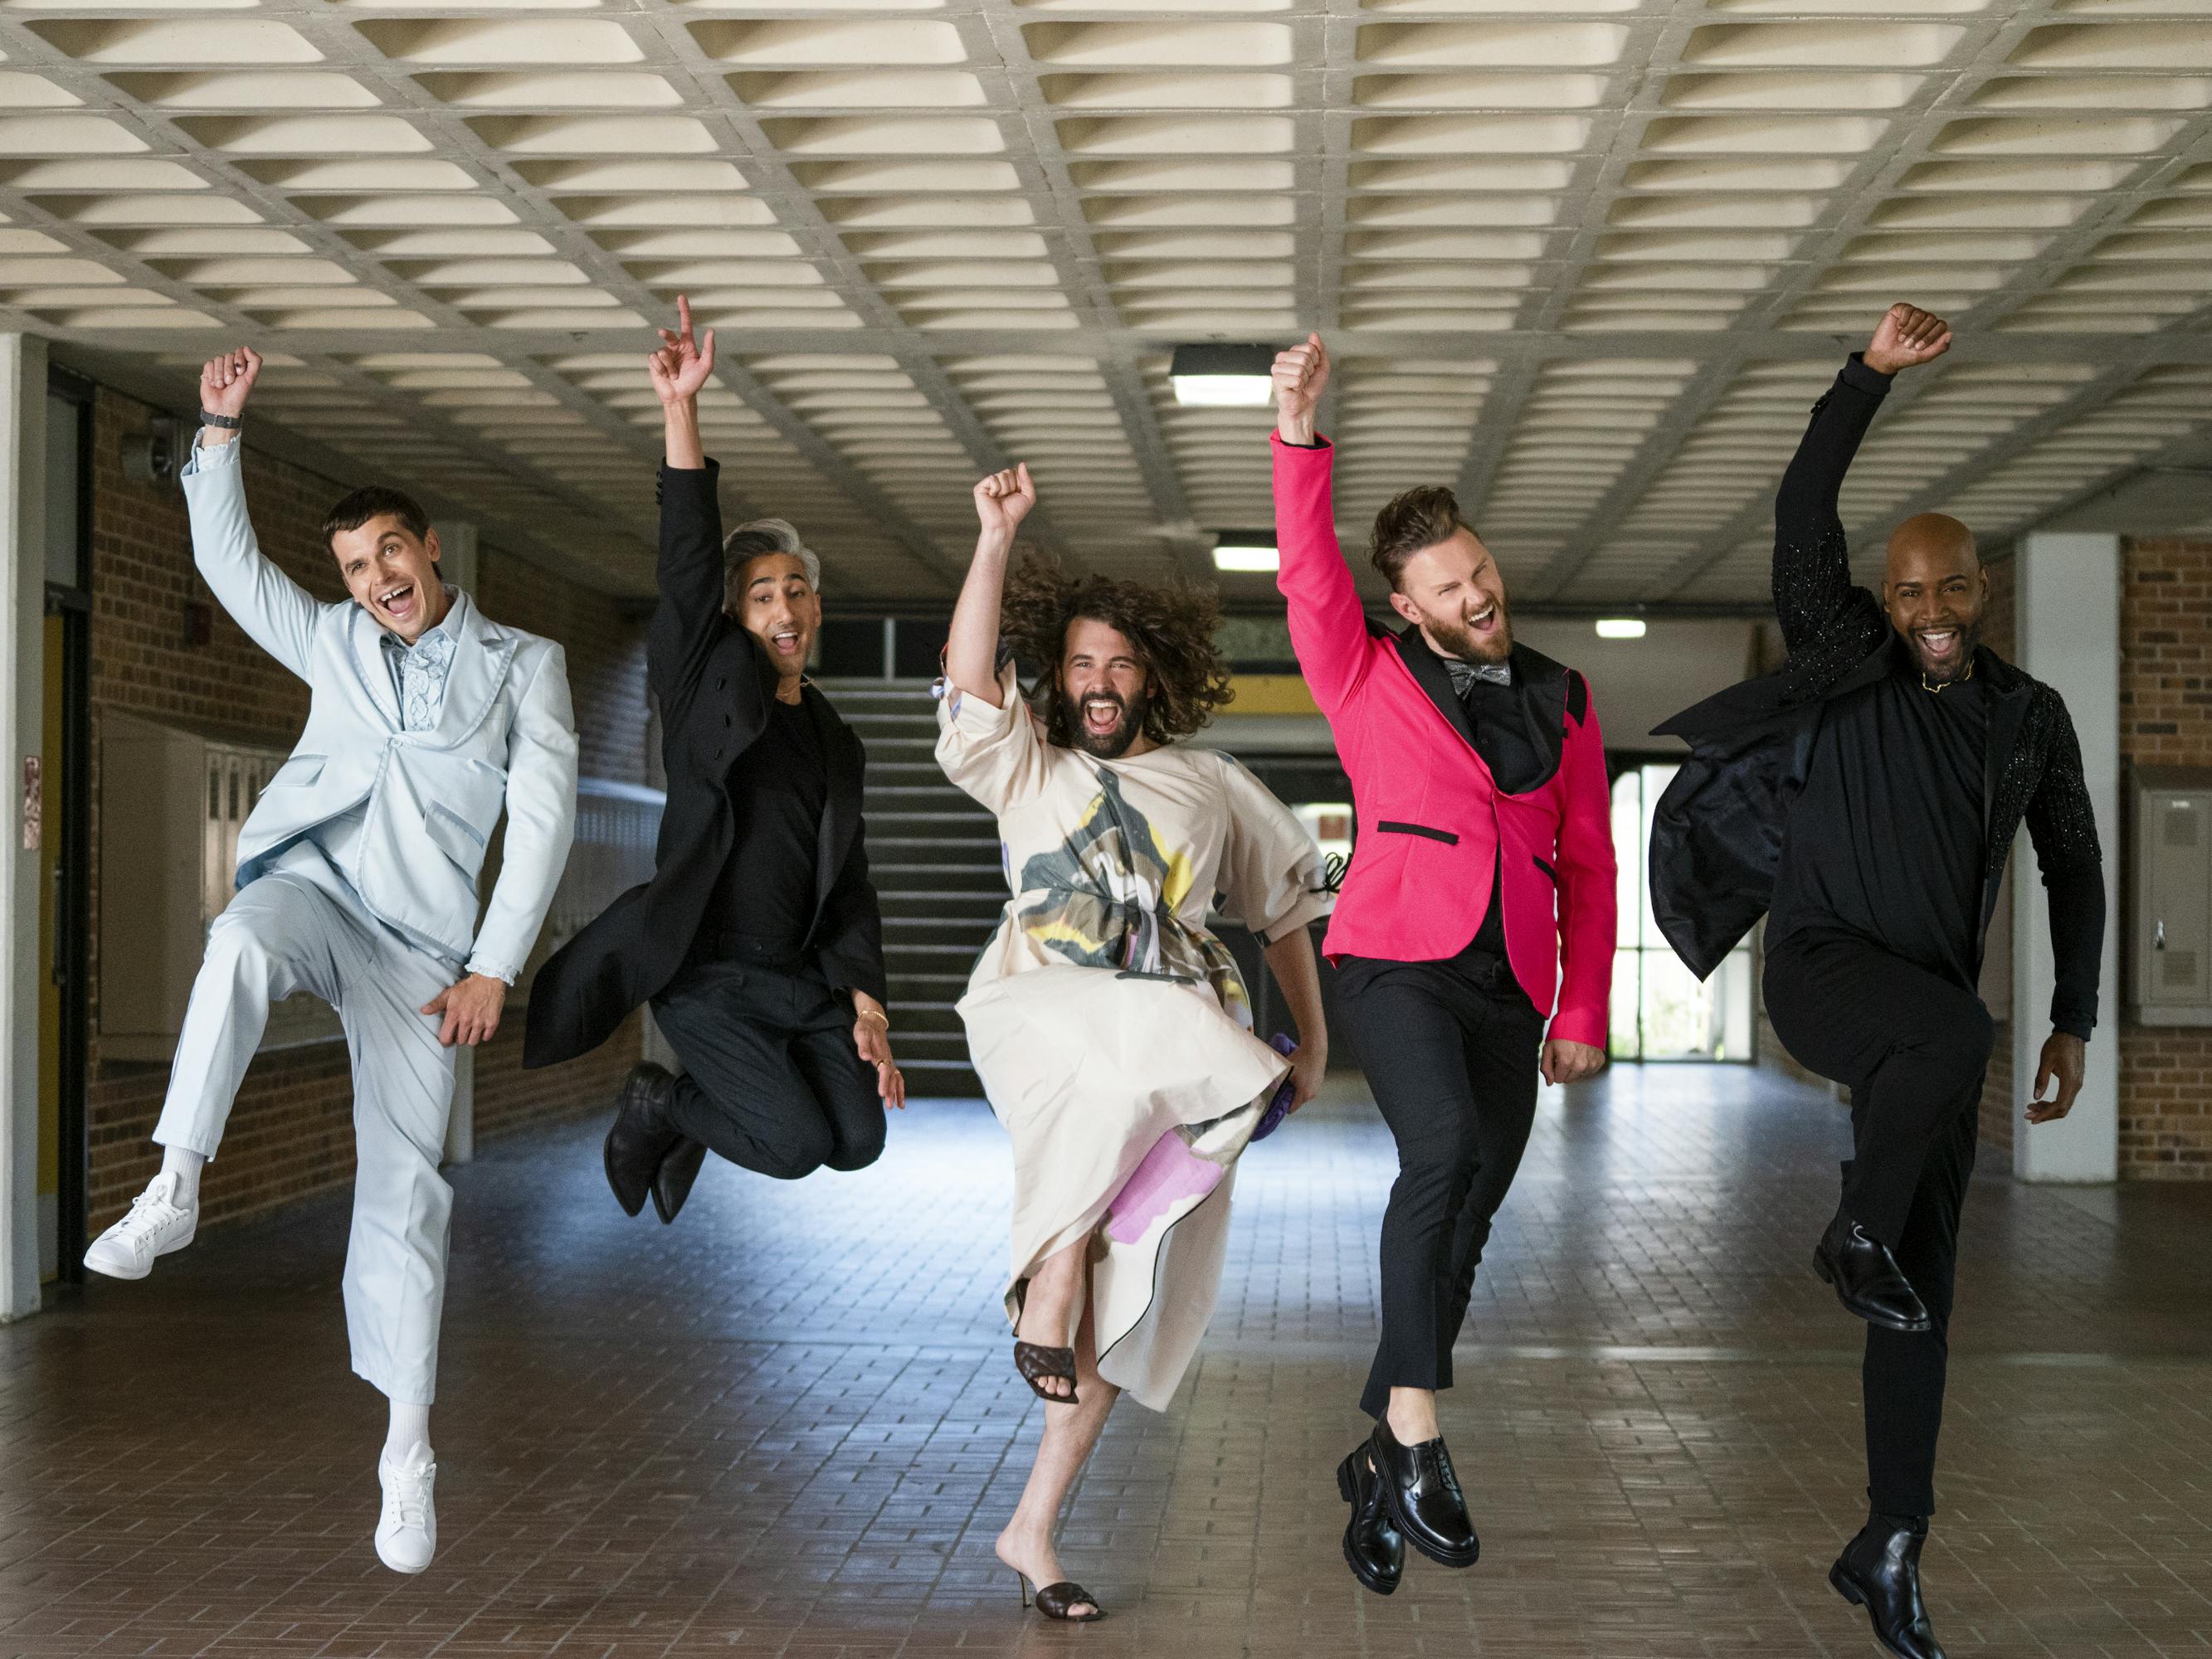 The Fab Five — Antoni Porowski, Tan France, Jonathan Van Ness, Bobby Berk, and Karamo Brown— dance in a low-ceiling room.